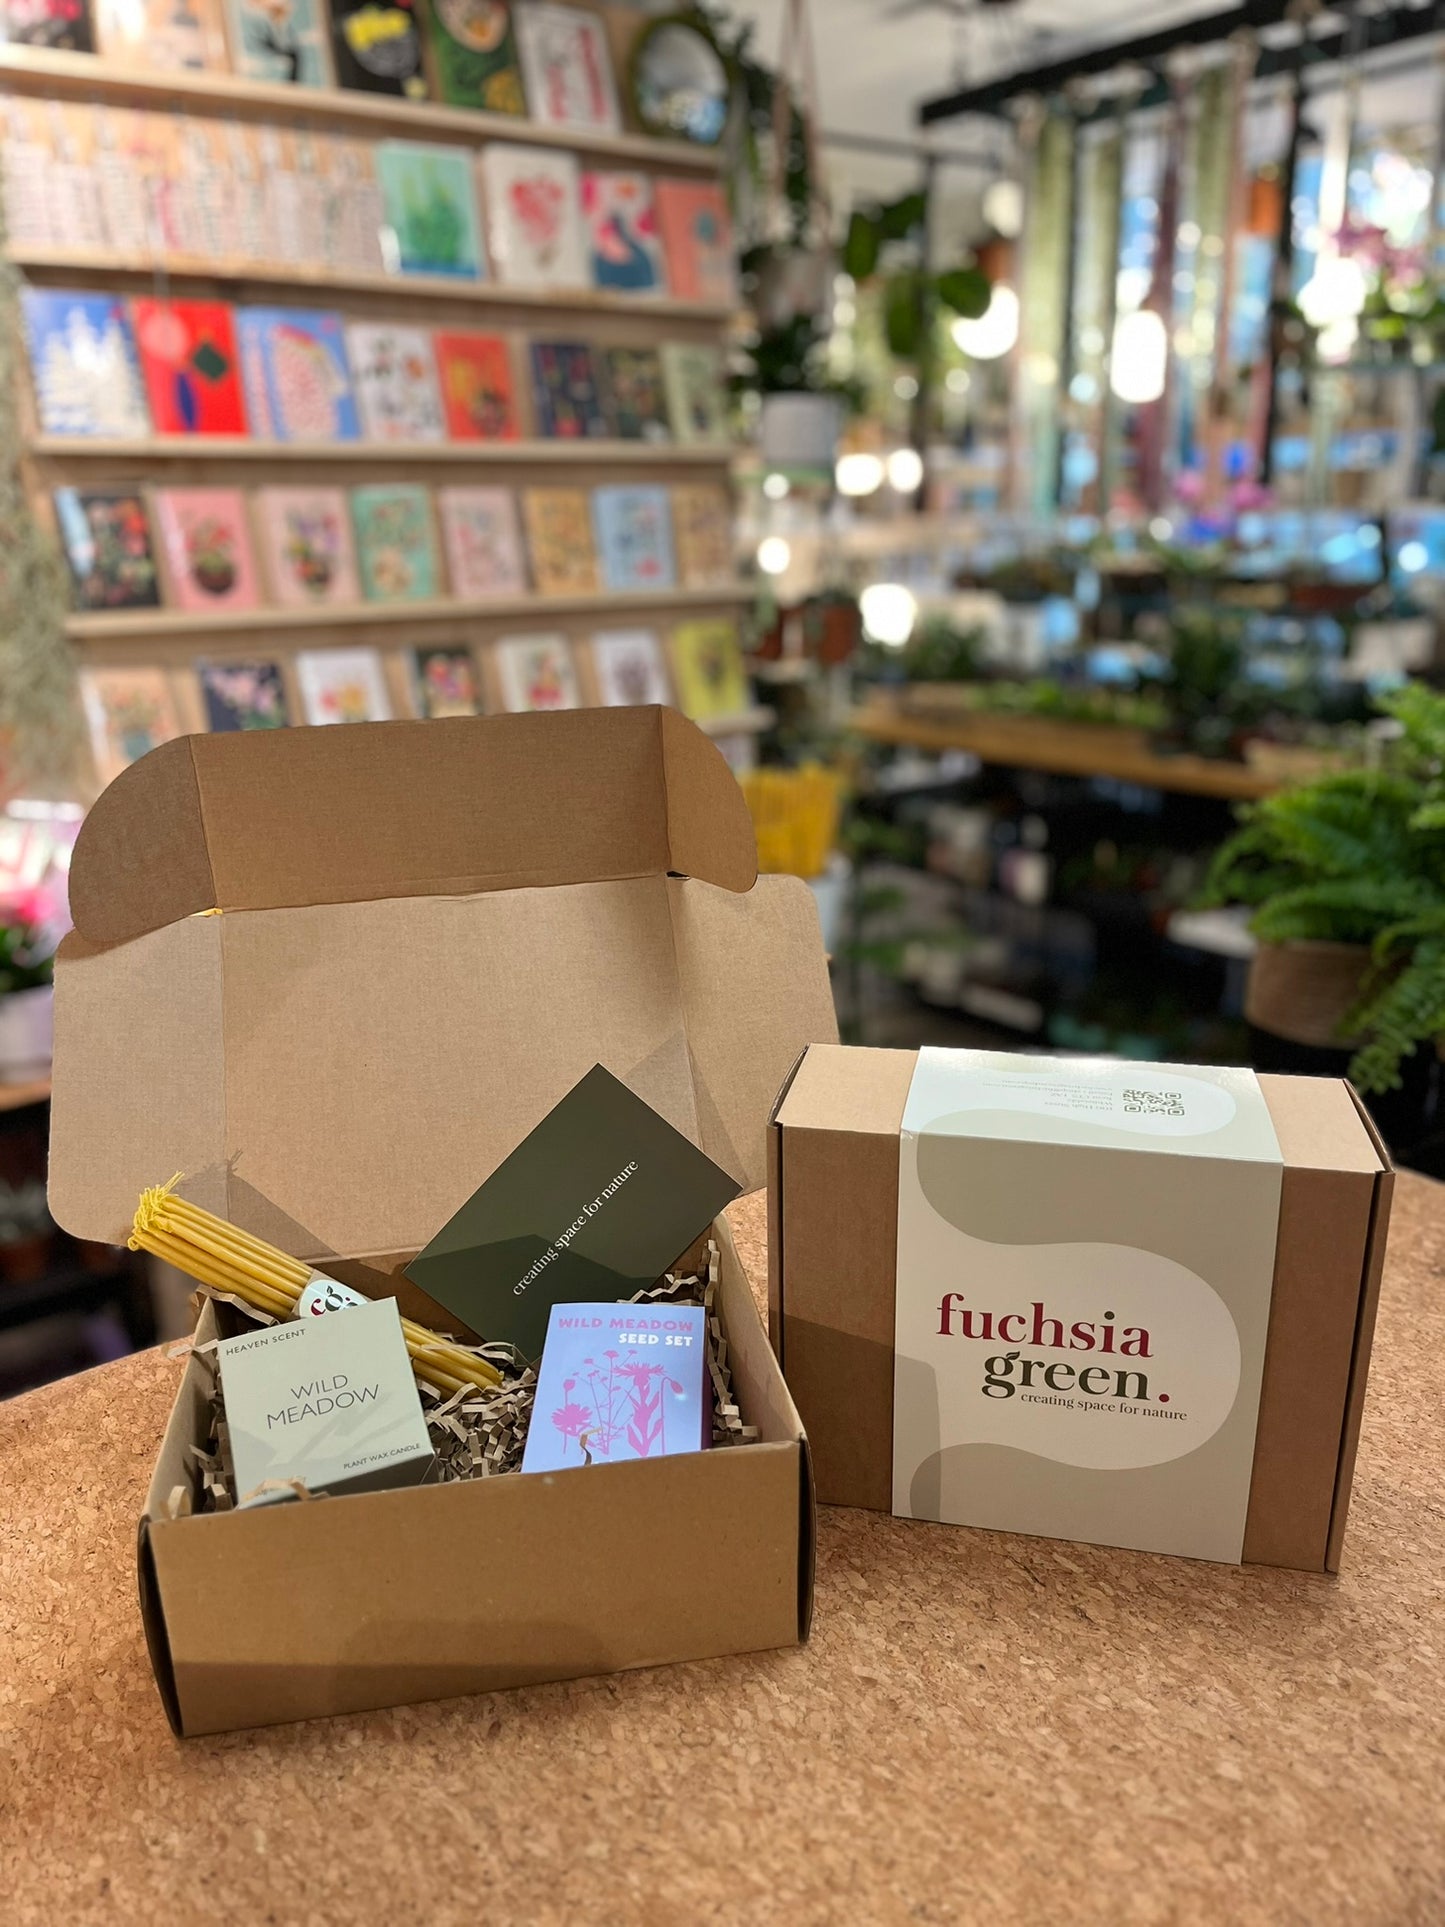 Meadow Gift Box